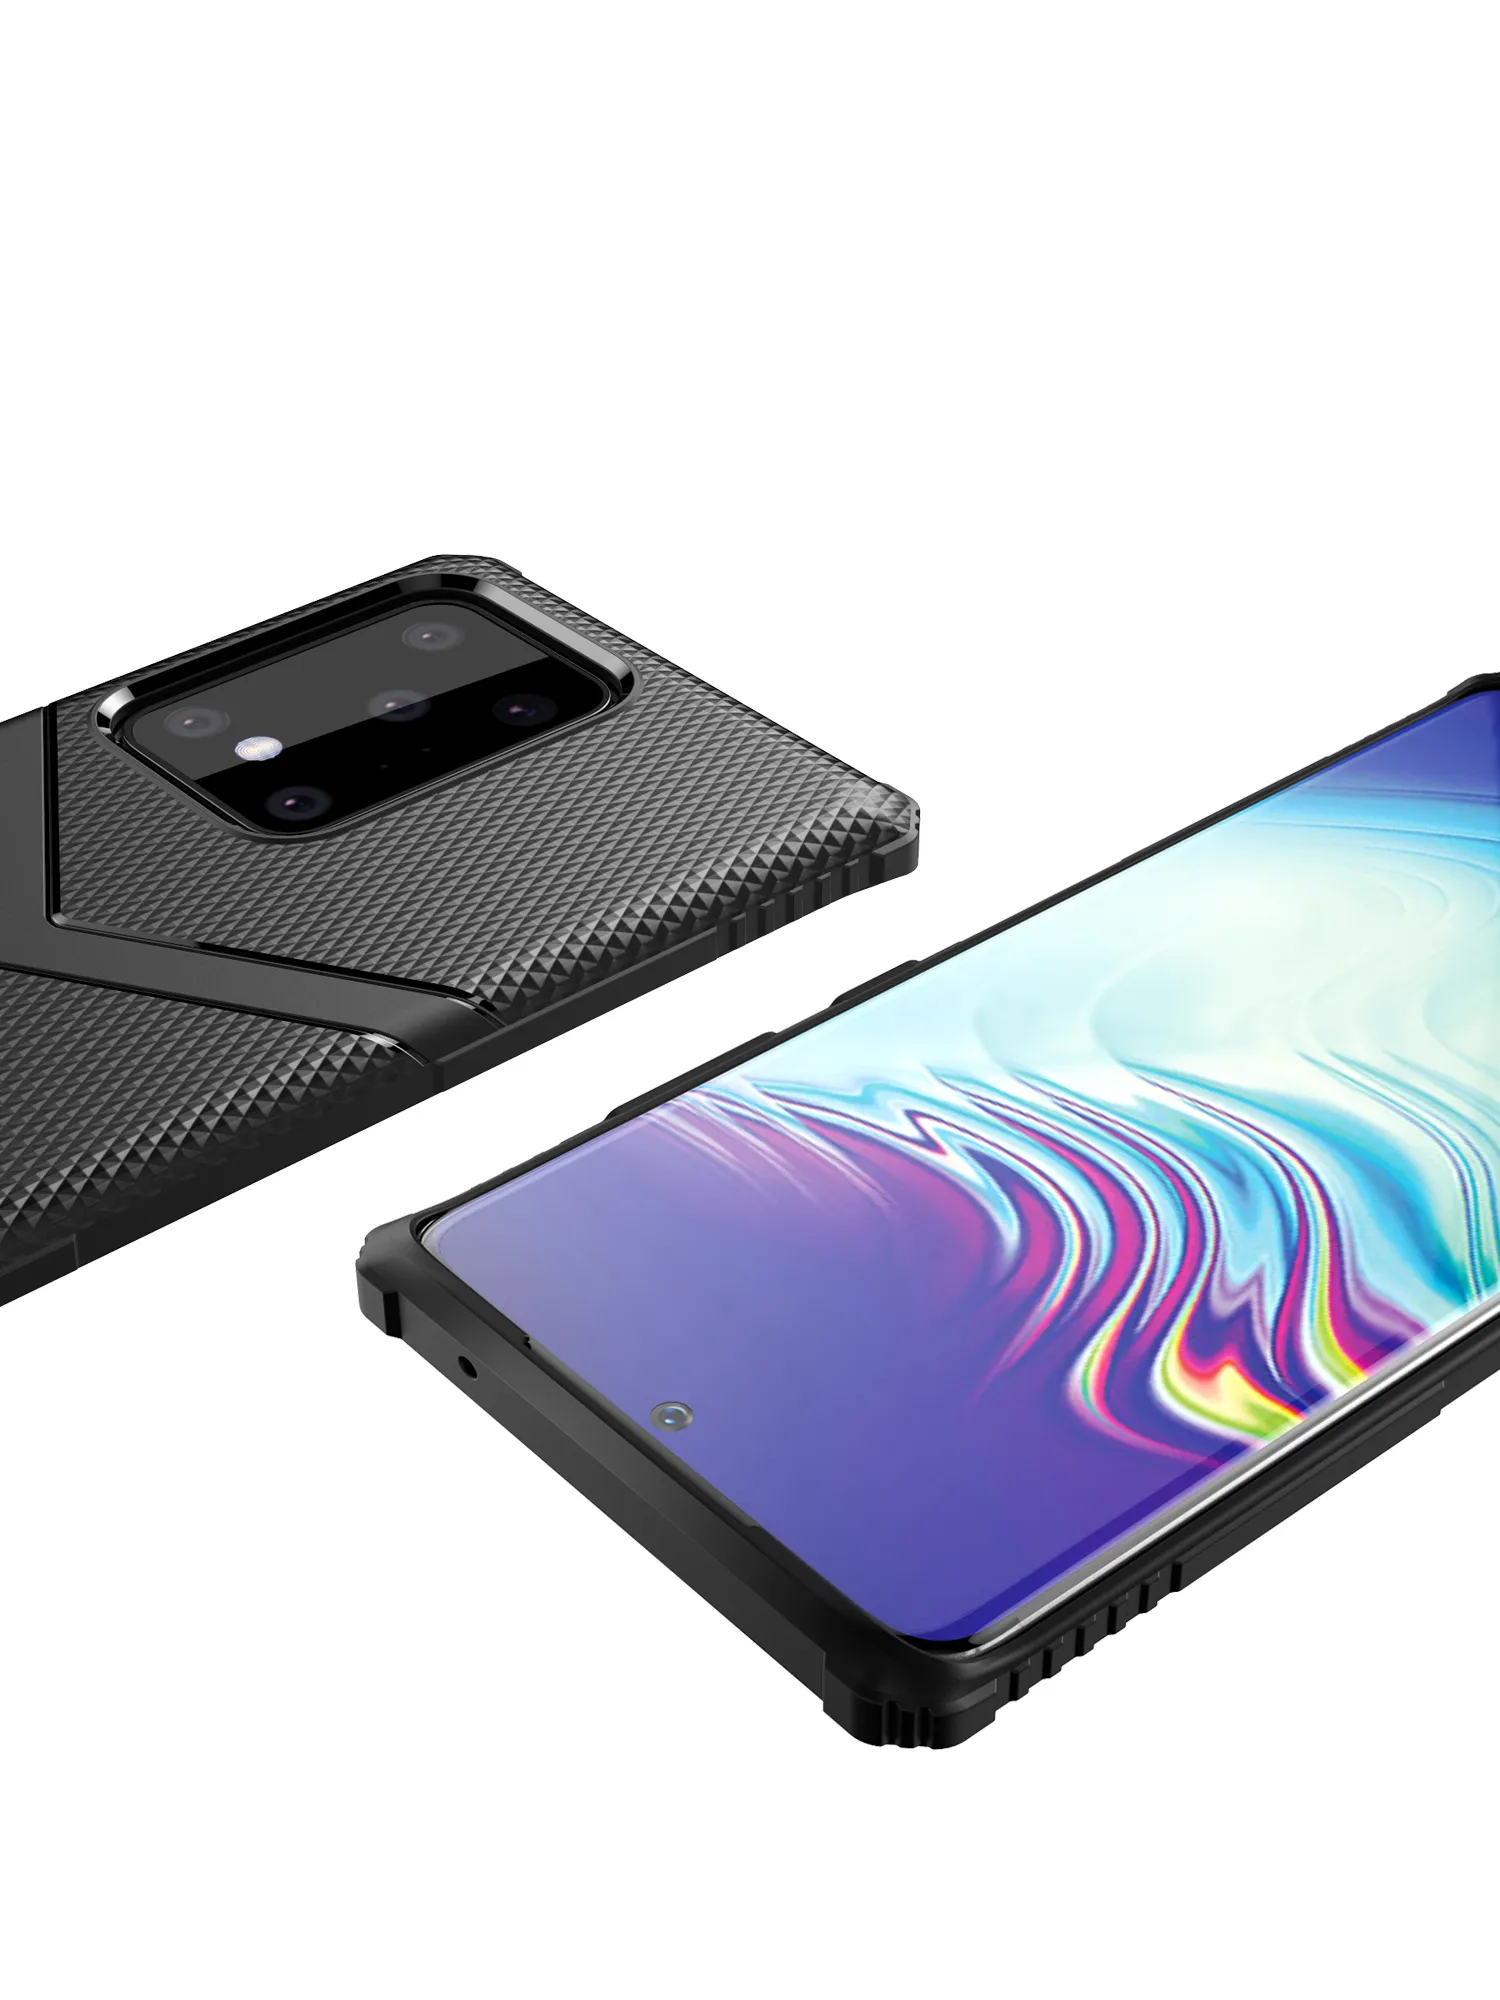 Samsung Galaxy S20 Ultra内蔵アンチフォールエアバッグS10 Note 10 Plusの携帯電話のケース